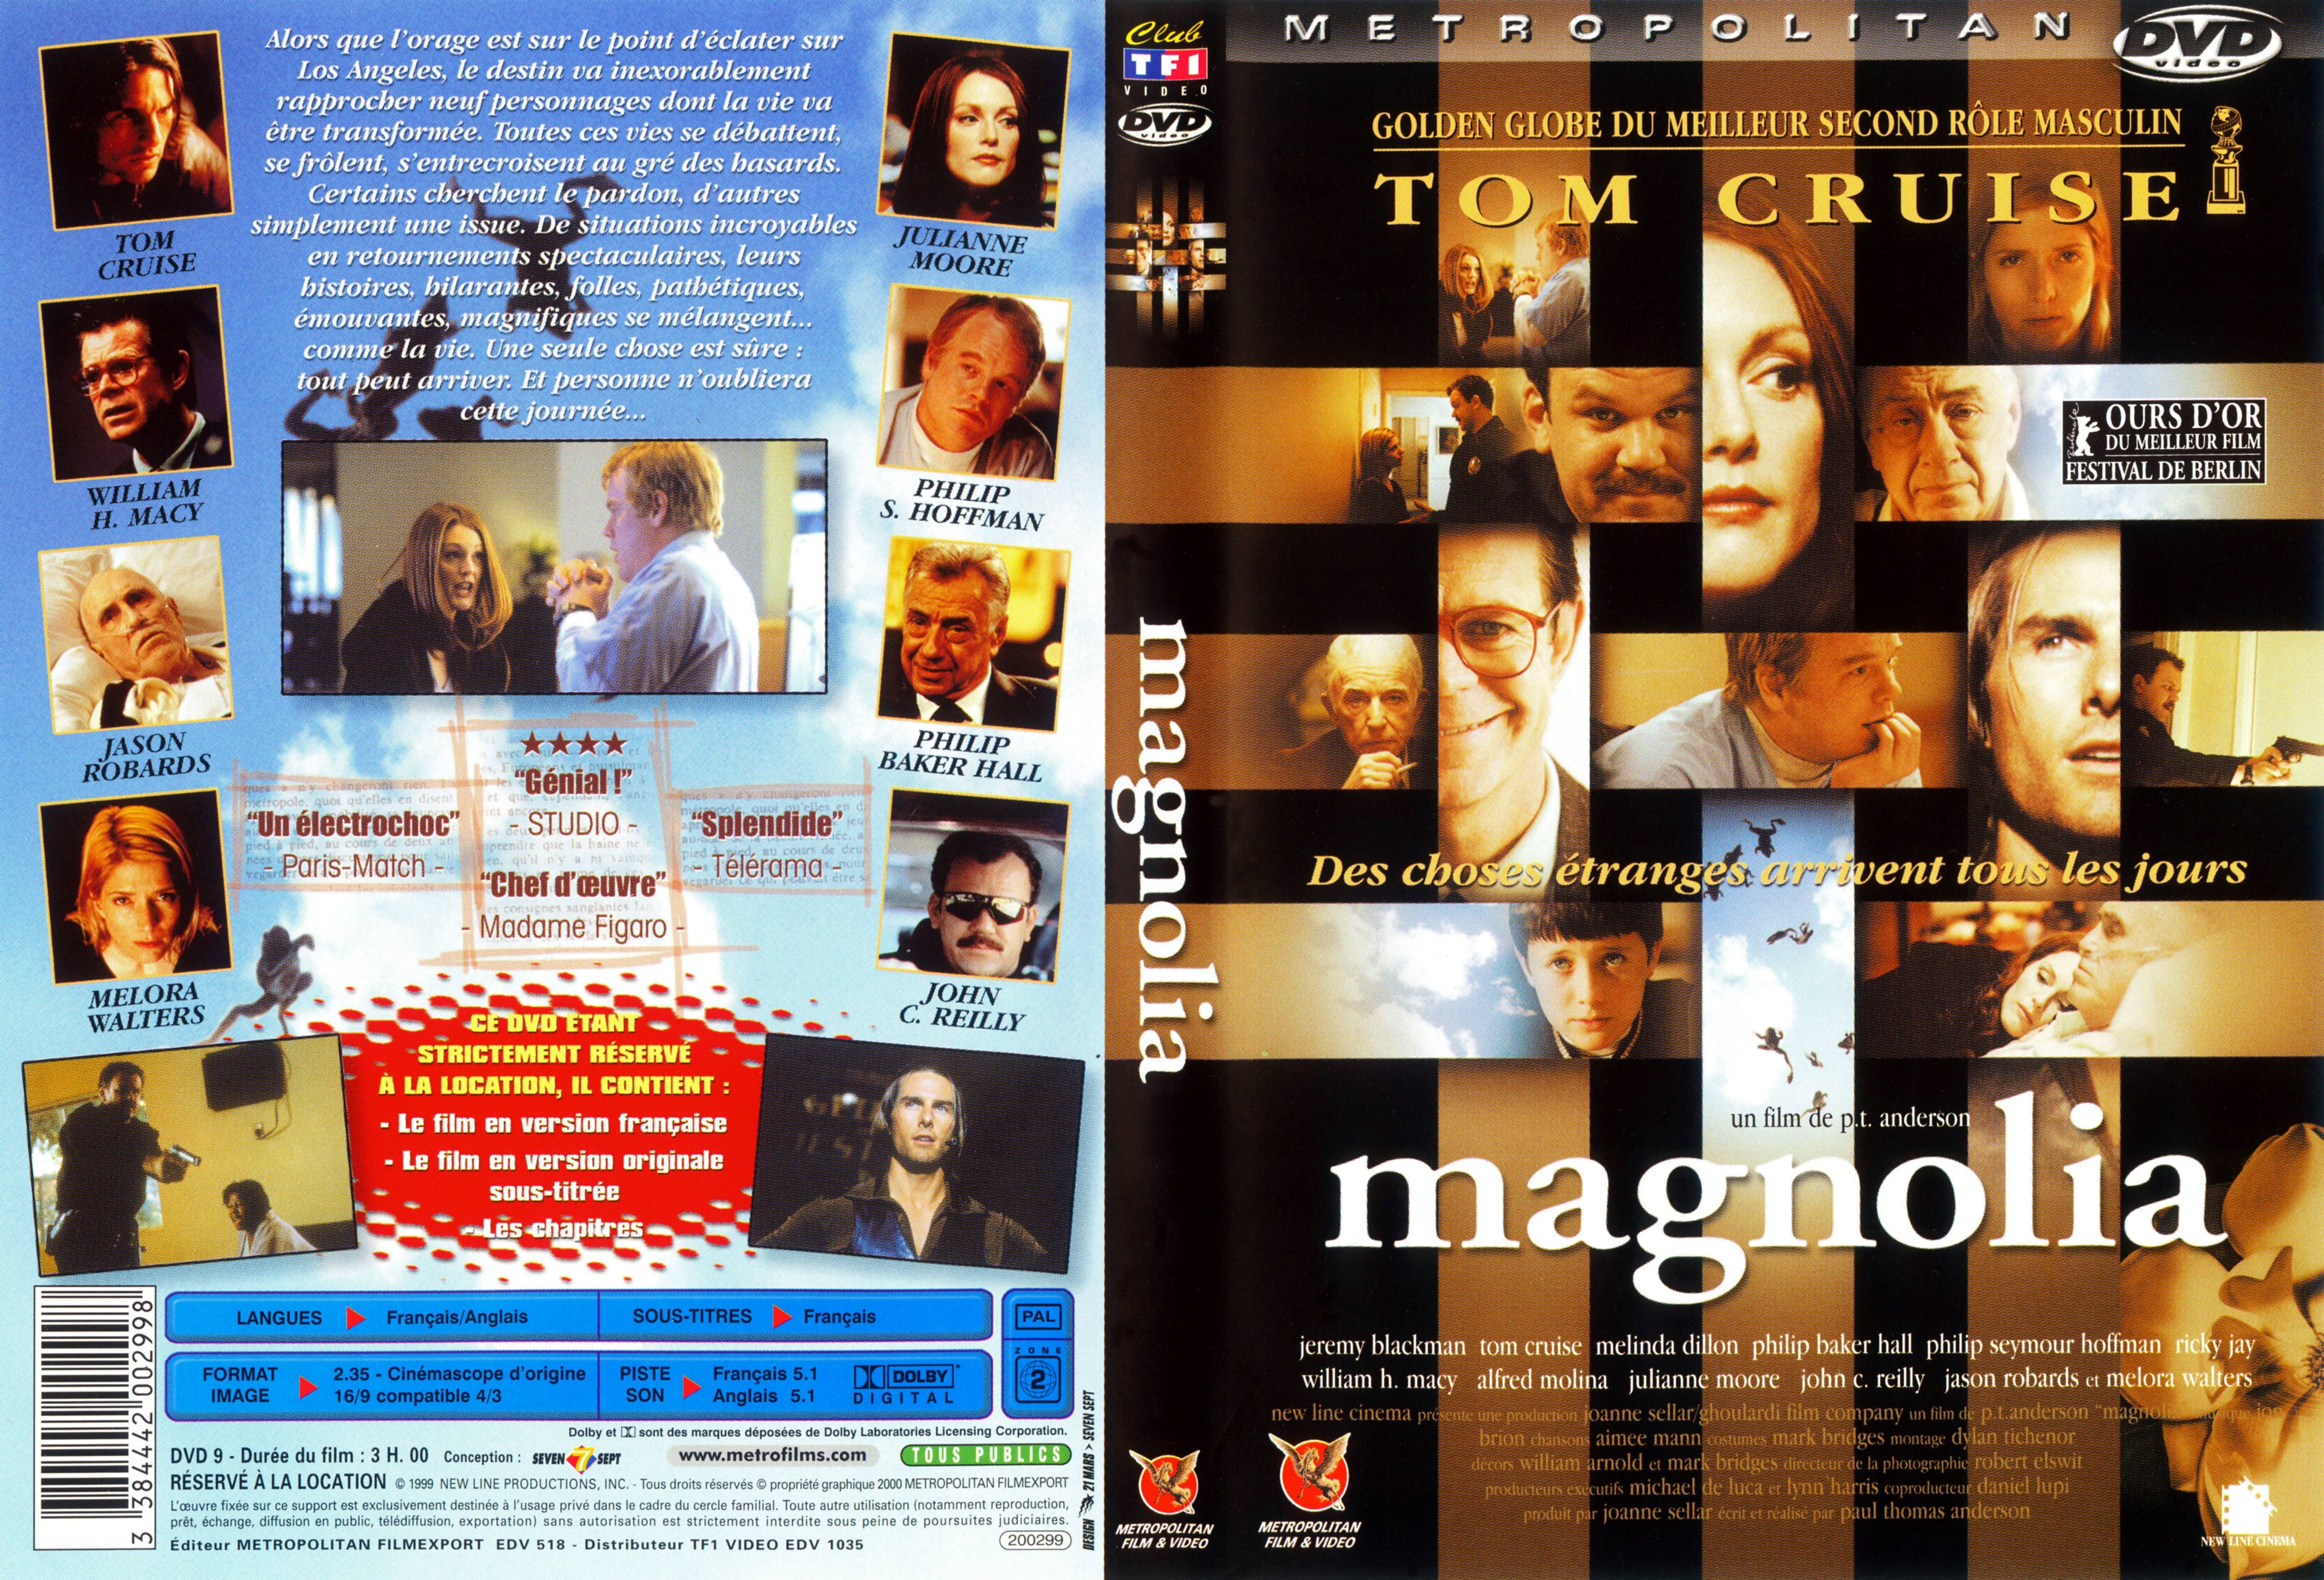 Jaquette DVD Magnolia v3